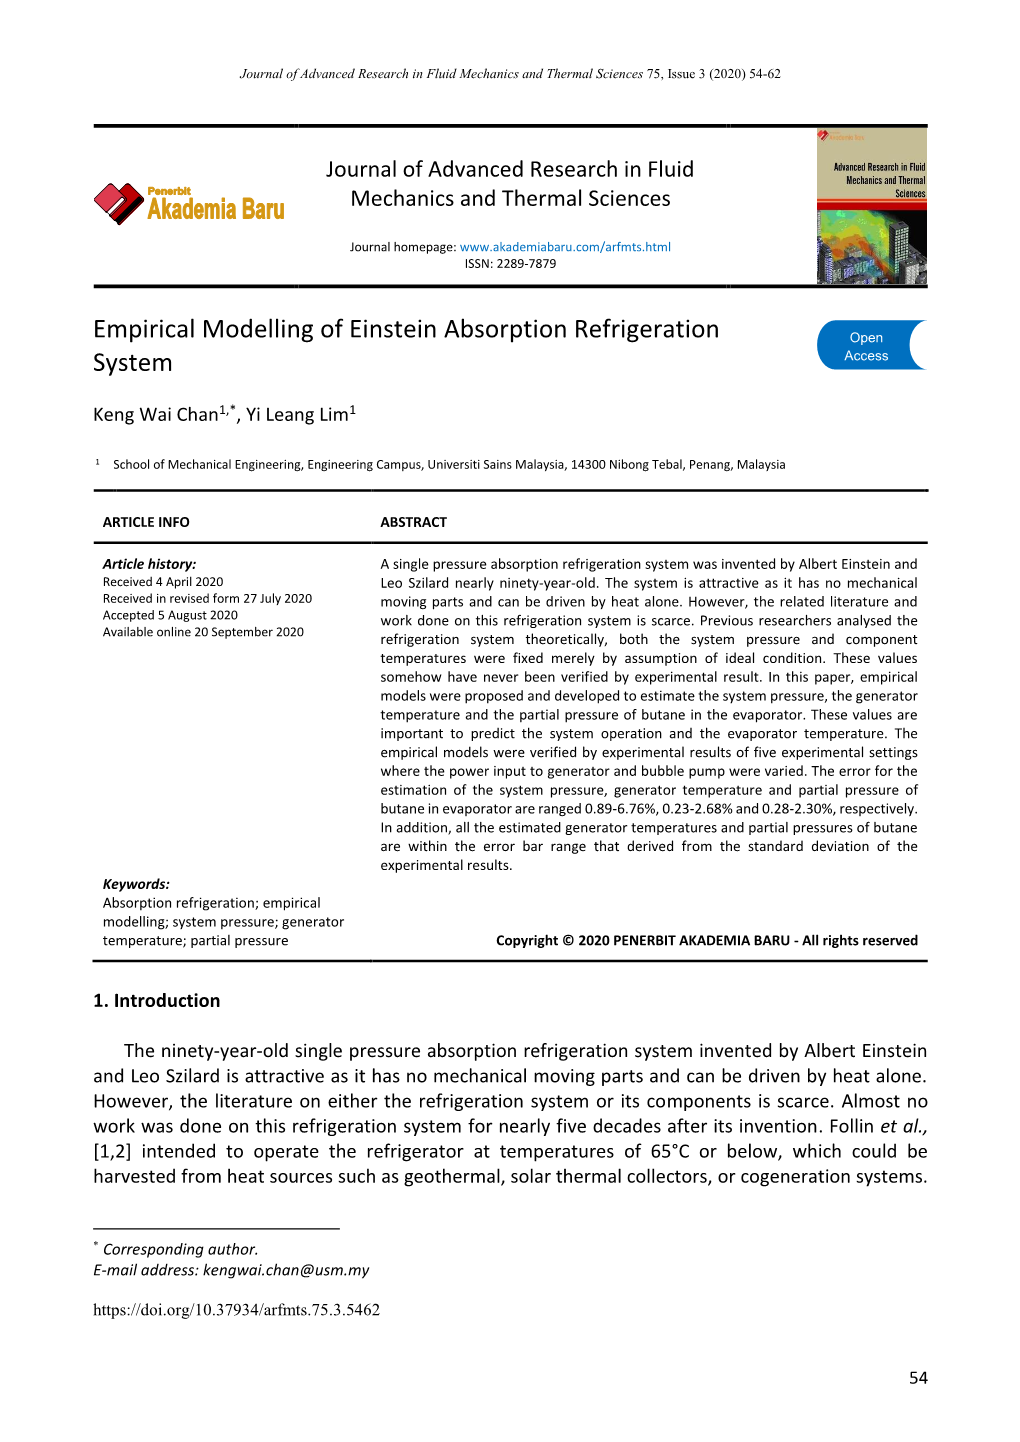 Empirical Modelling of Einstein Absorption Refrigeration System